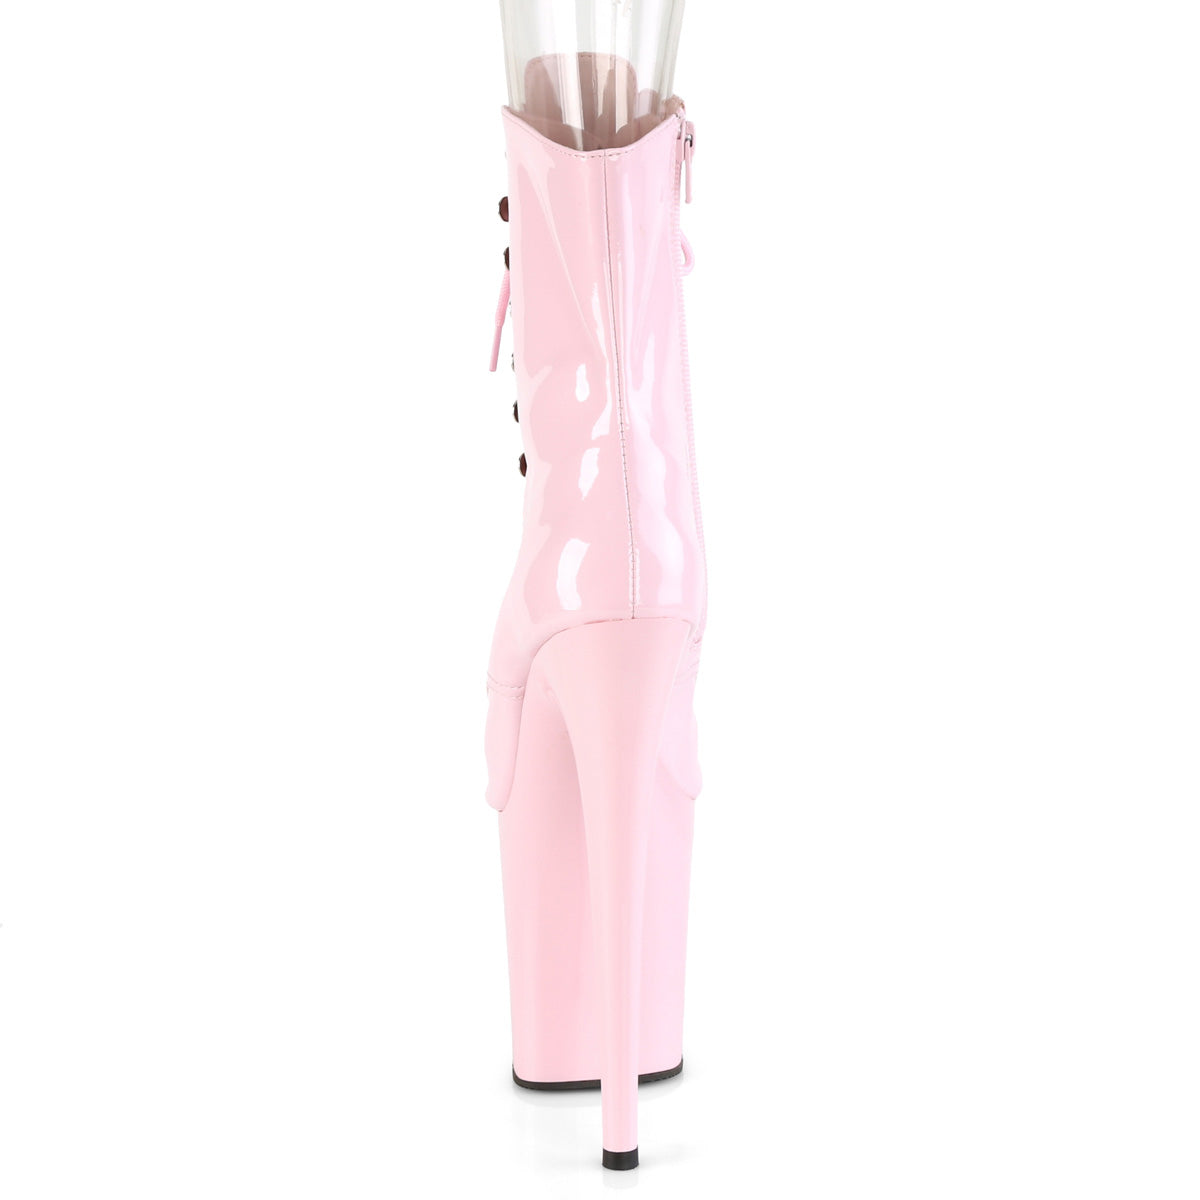 FLAMINGO-1021 8" Heel Baby Pink Pole Dancing -Pleaser- Sexy Shoes Fetish Footwear